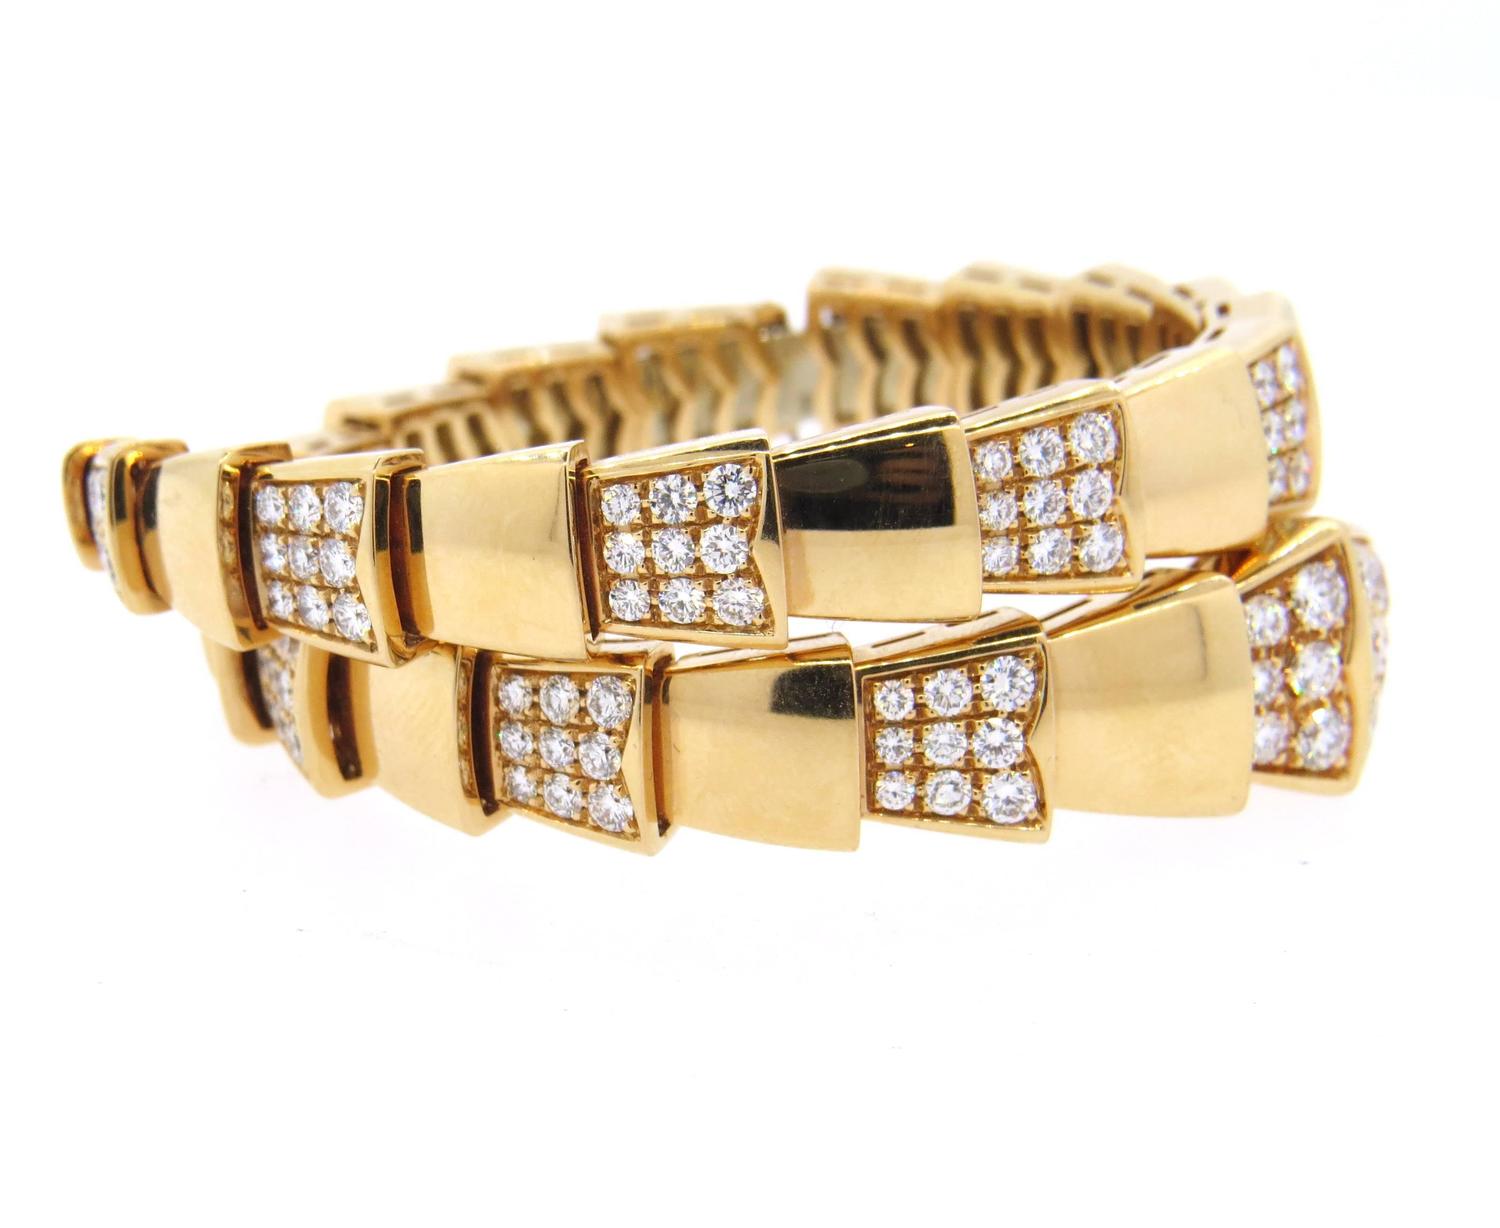 Impressive Bulgari Serpenti Diamond Gold Wrap Bracelet For Sale at 1stdibs